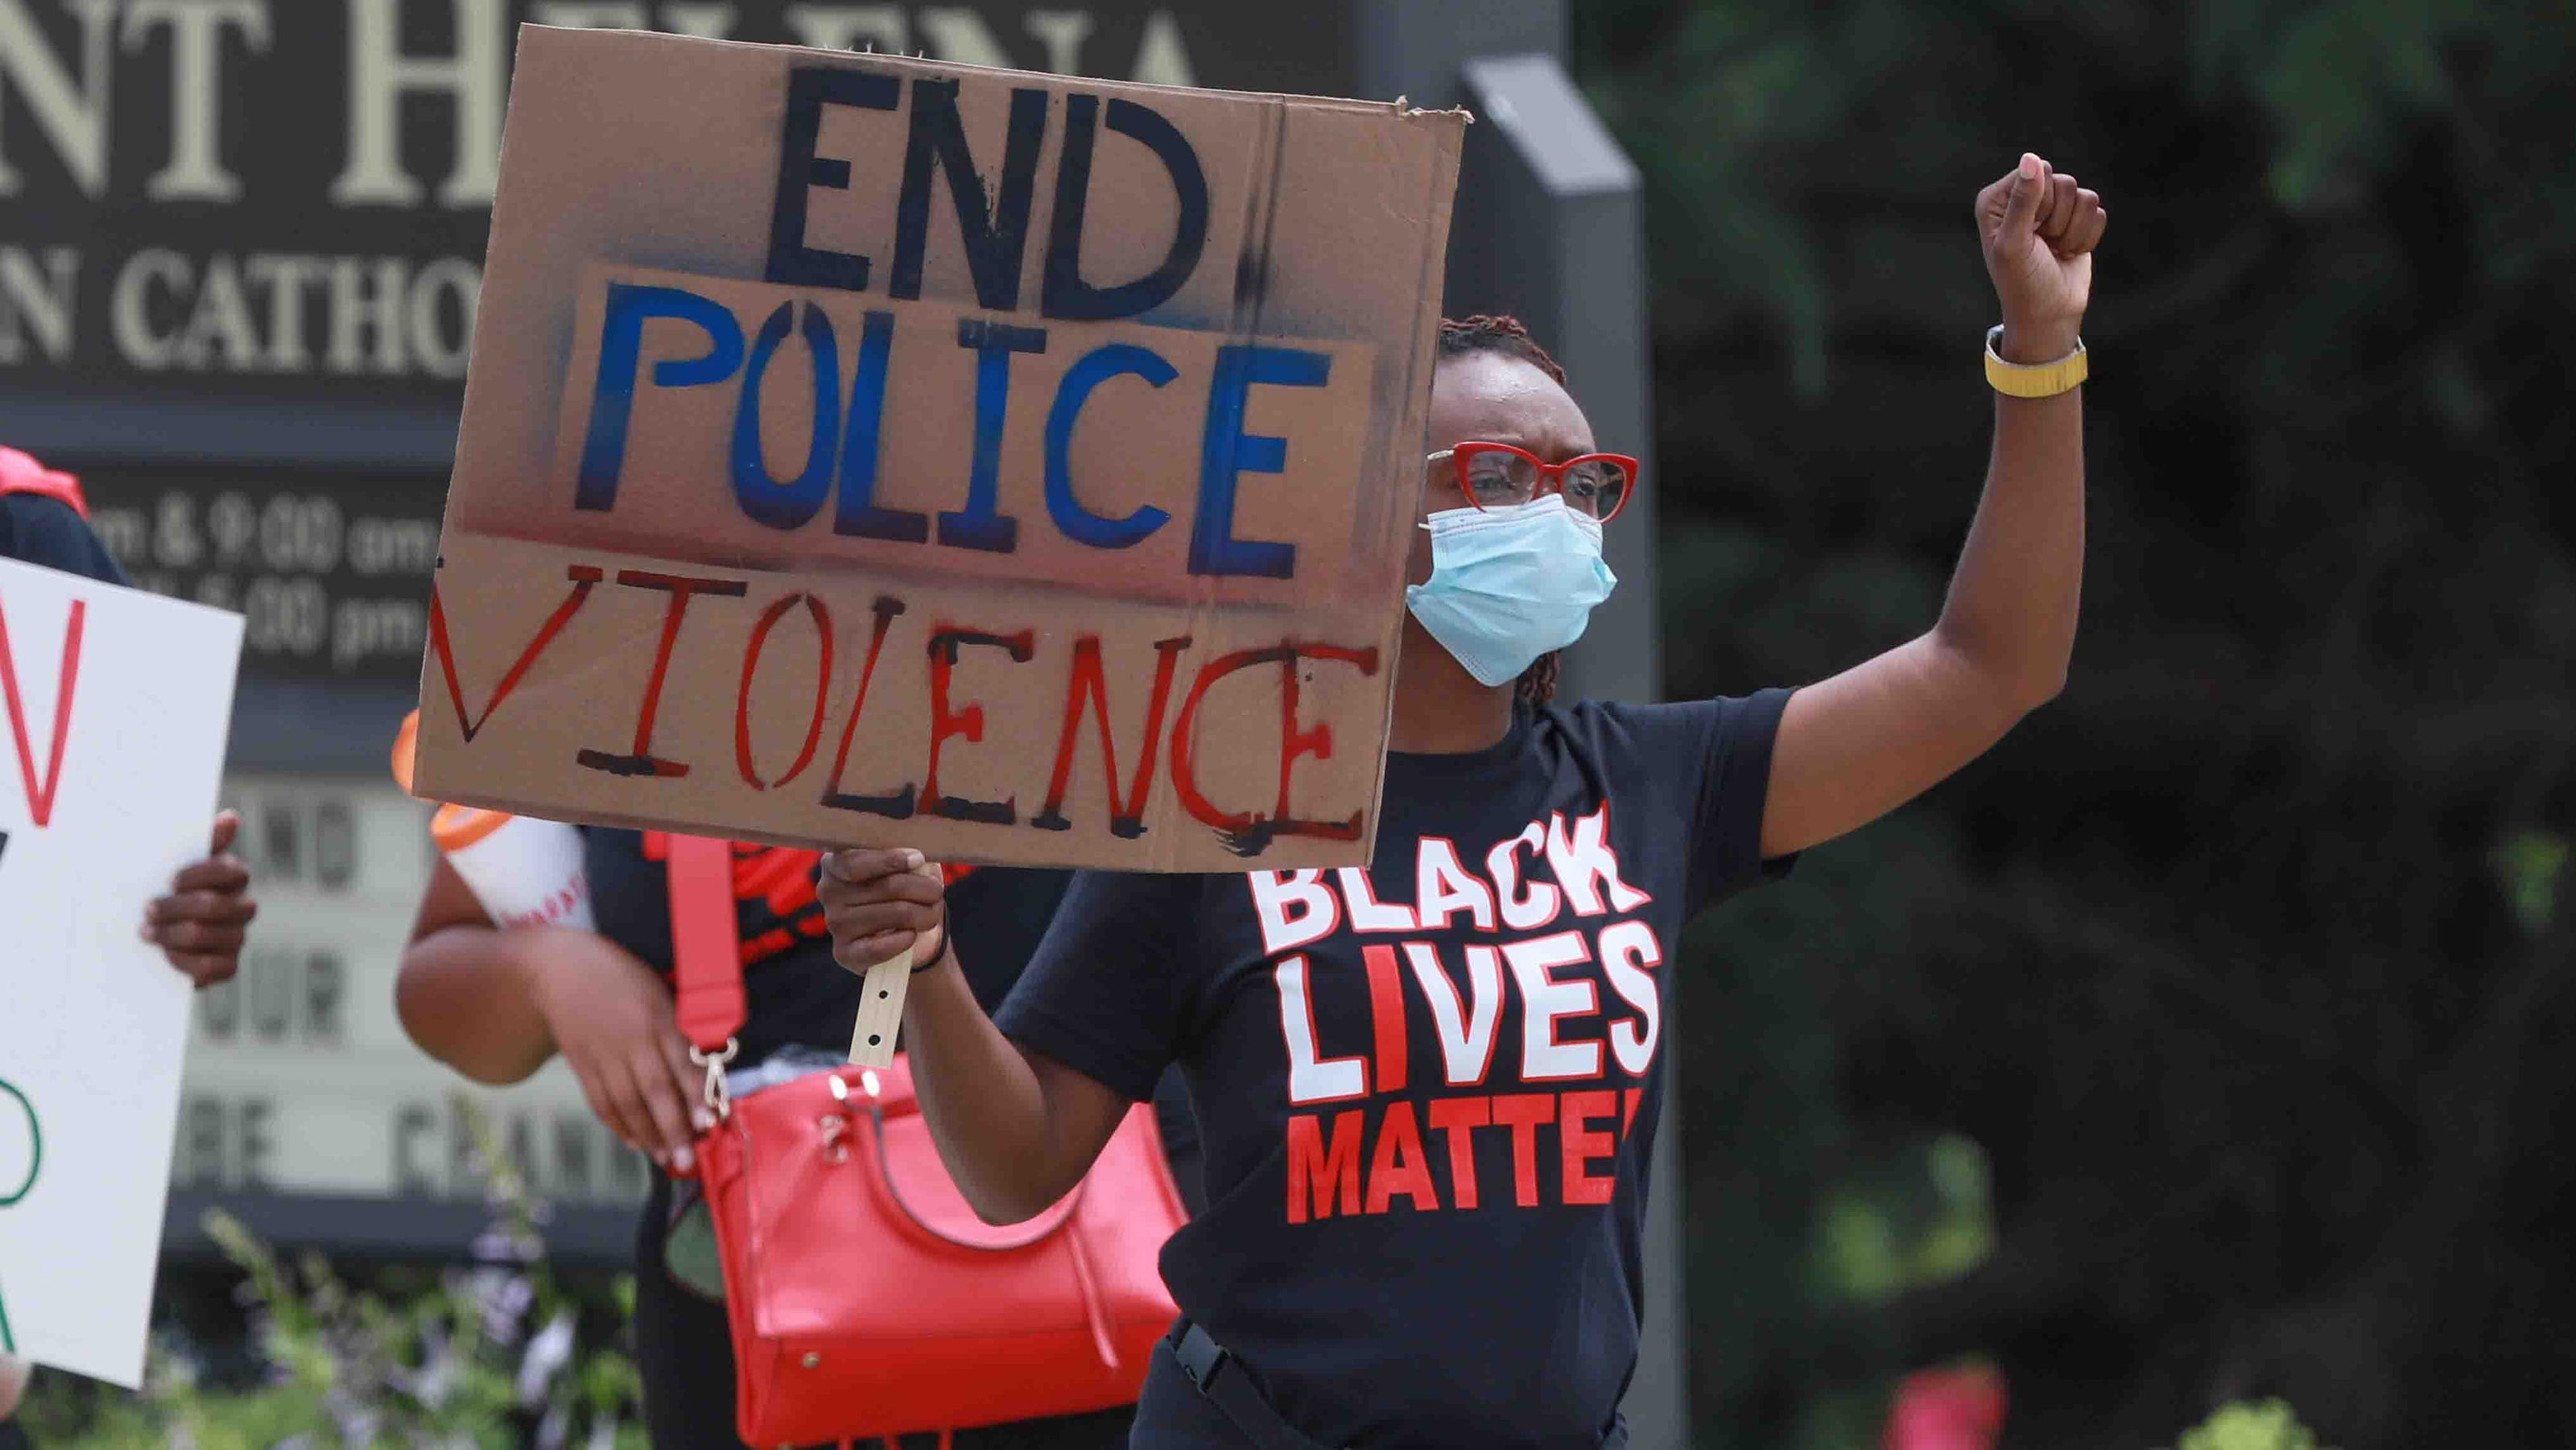 Black law enforcement in Delaware describe 'sense of urgency' in police